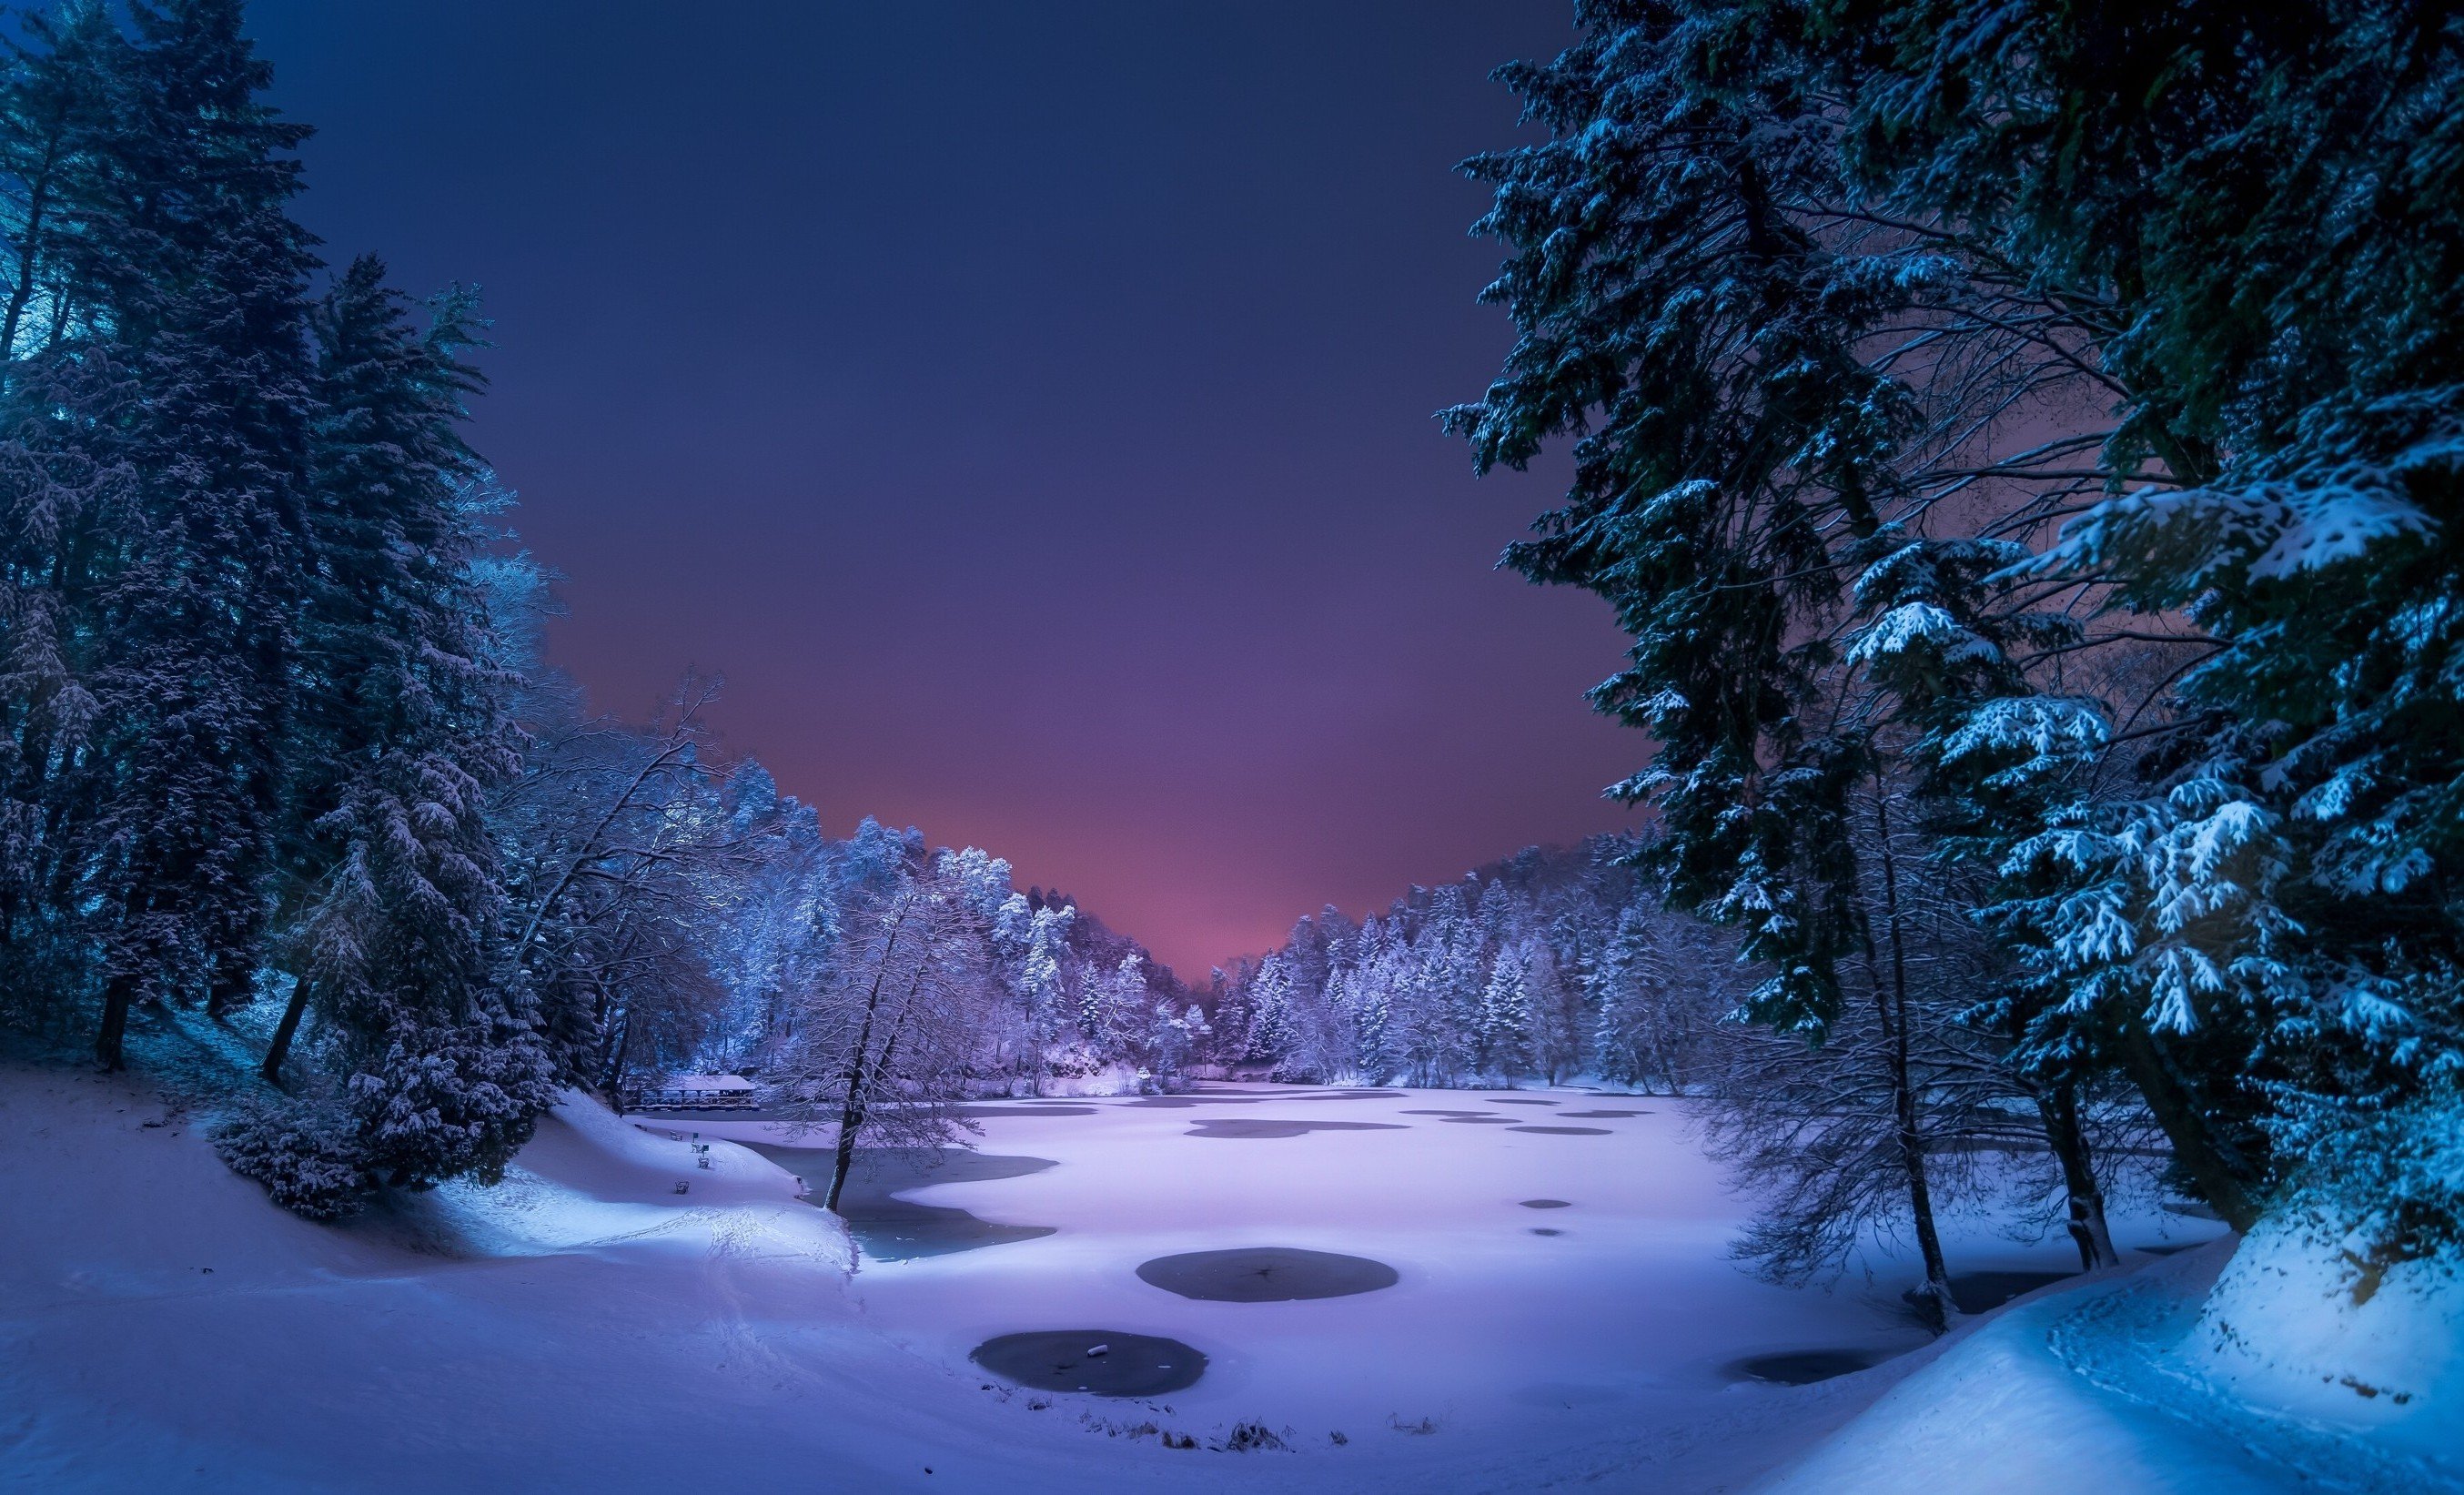 Night, Landscape, Snow, Ice, Winter, Trees, Nature